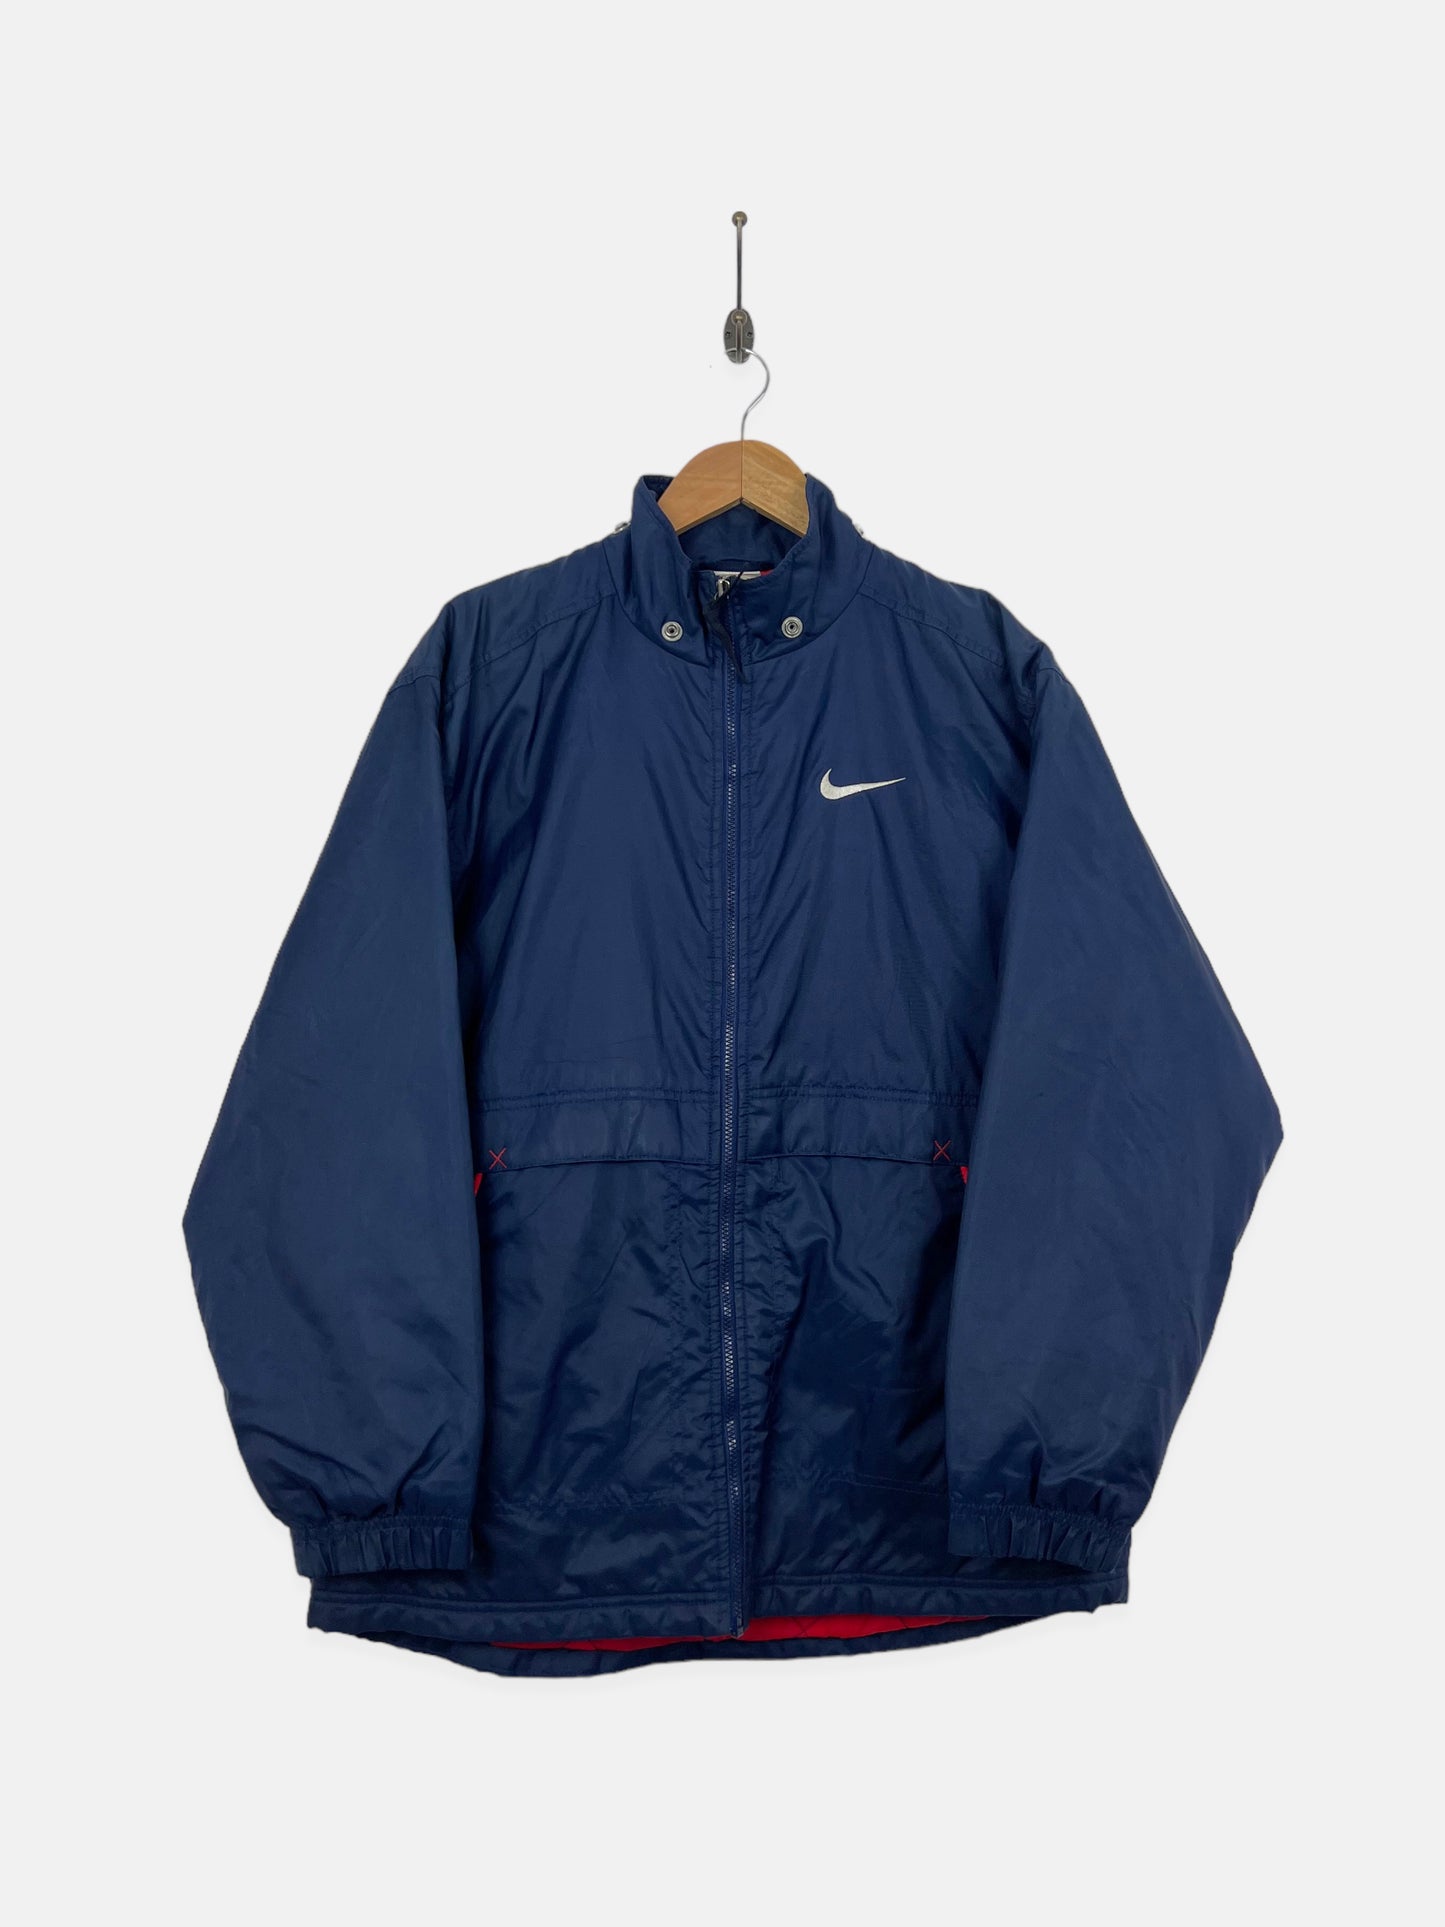 90's Nike Embroidered Vintage Jacket Size M